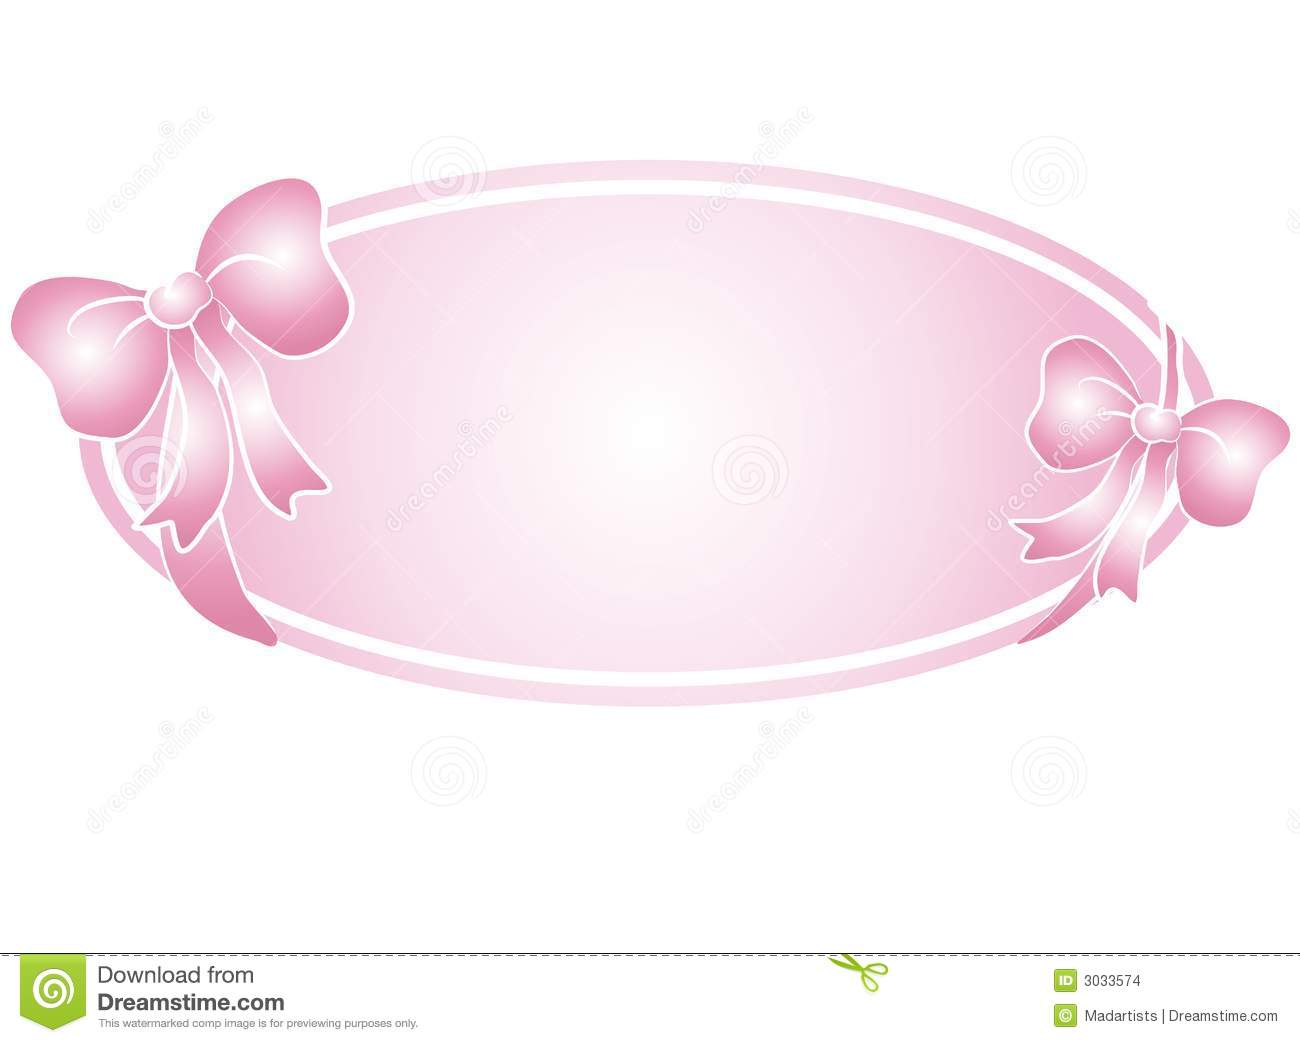 Clip Art Logo Illustration Of A Soft Pastel Pink Oval Shaped Web